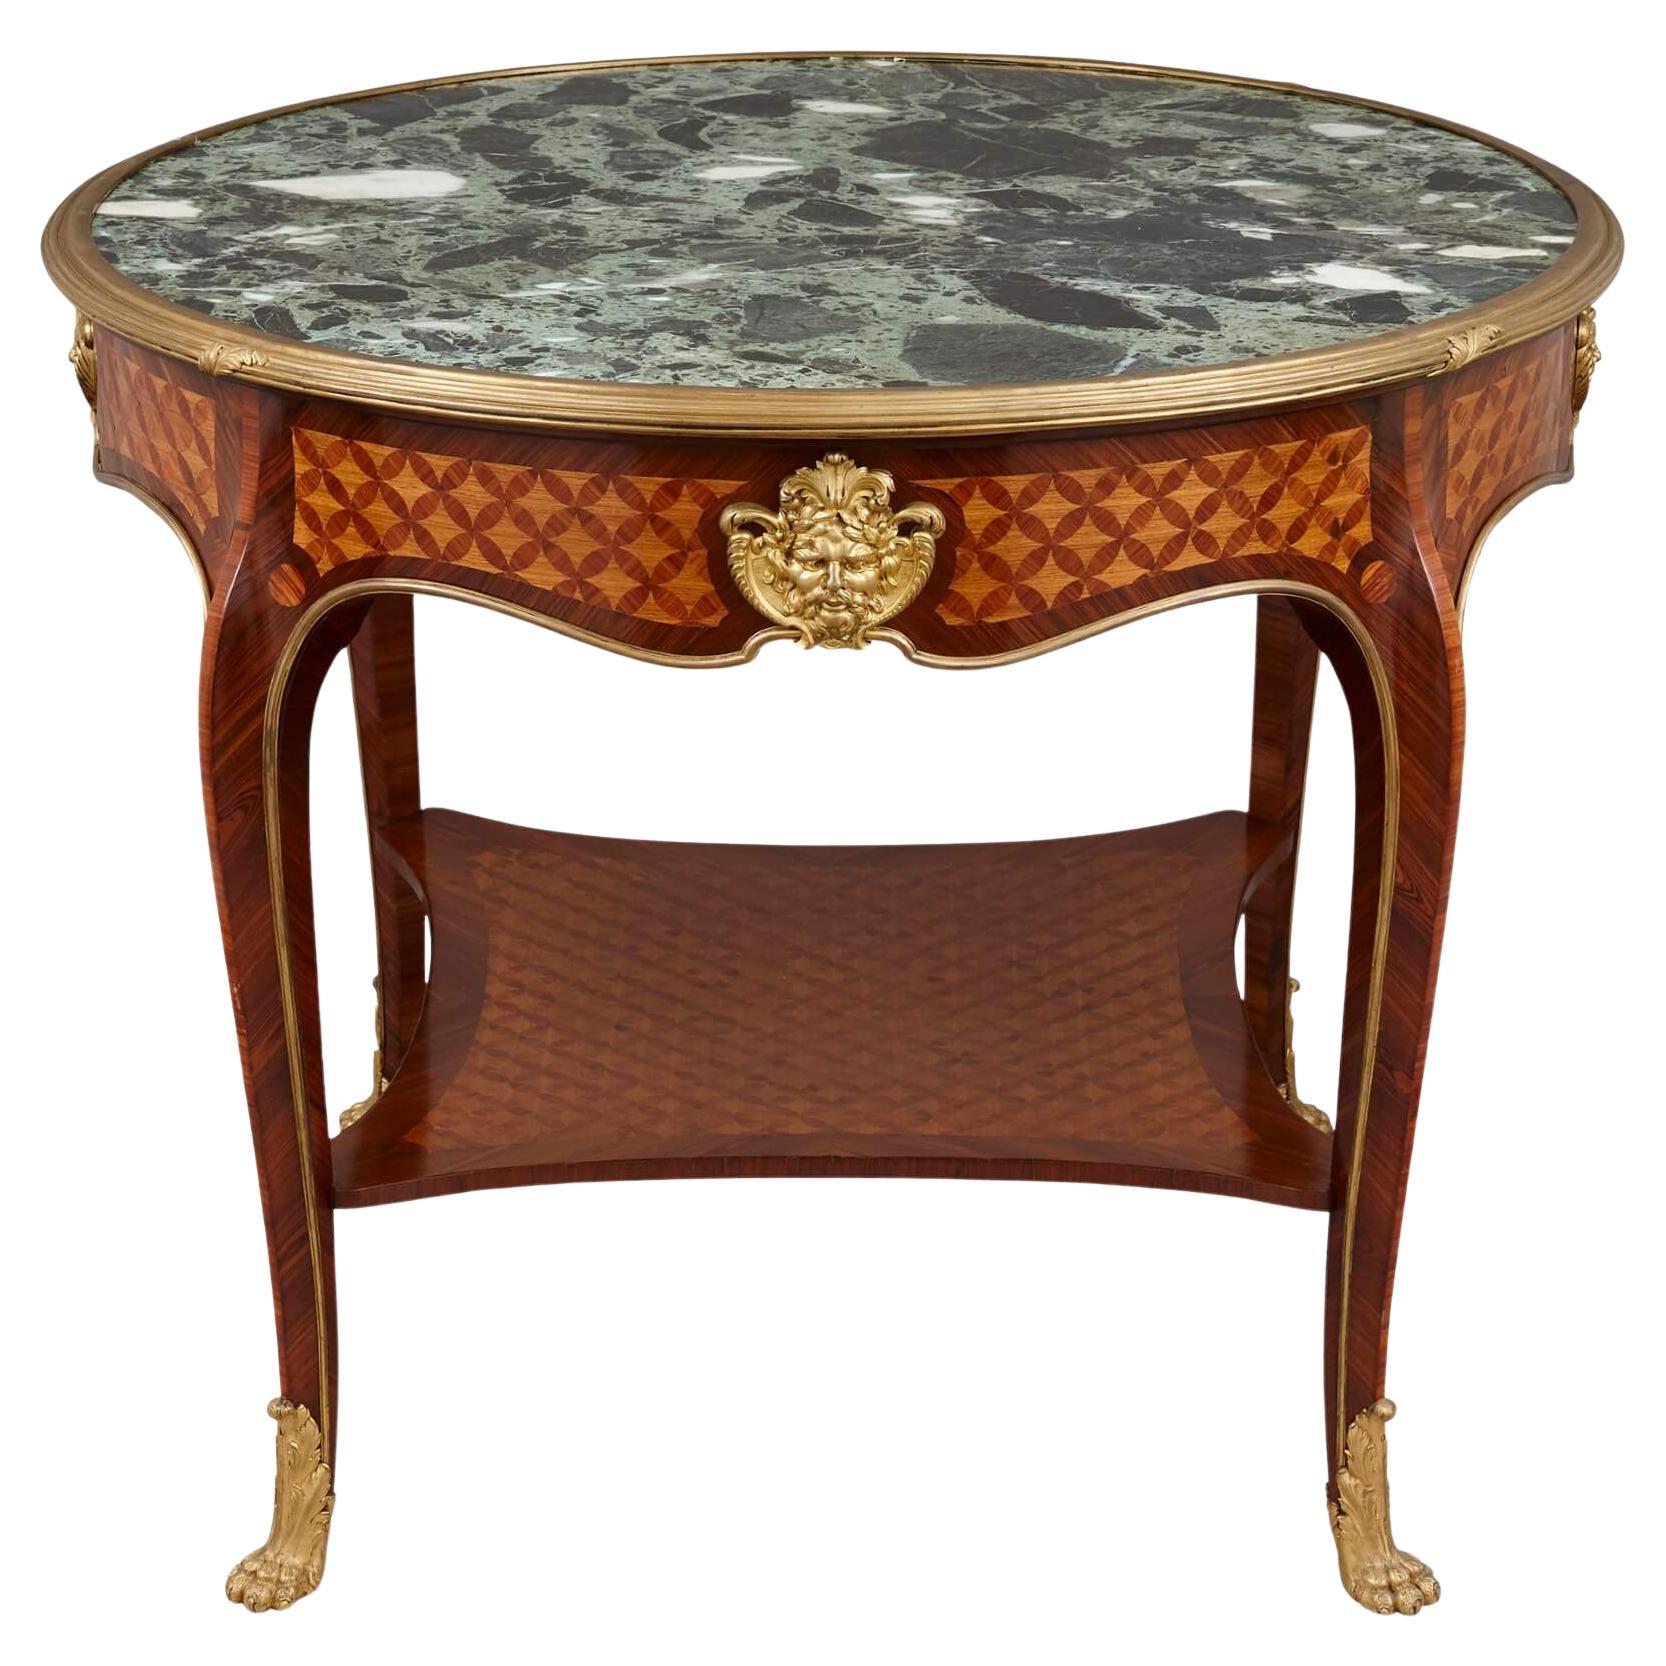 Antique Louis XV Style Ormolu Mounted Table by L'Escalier de Cristal